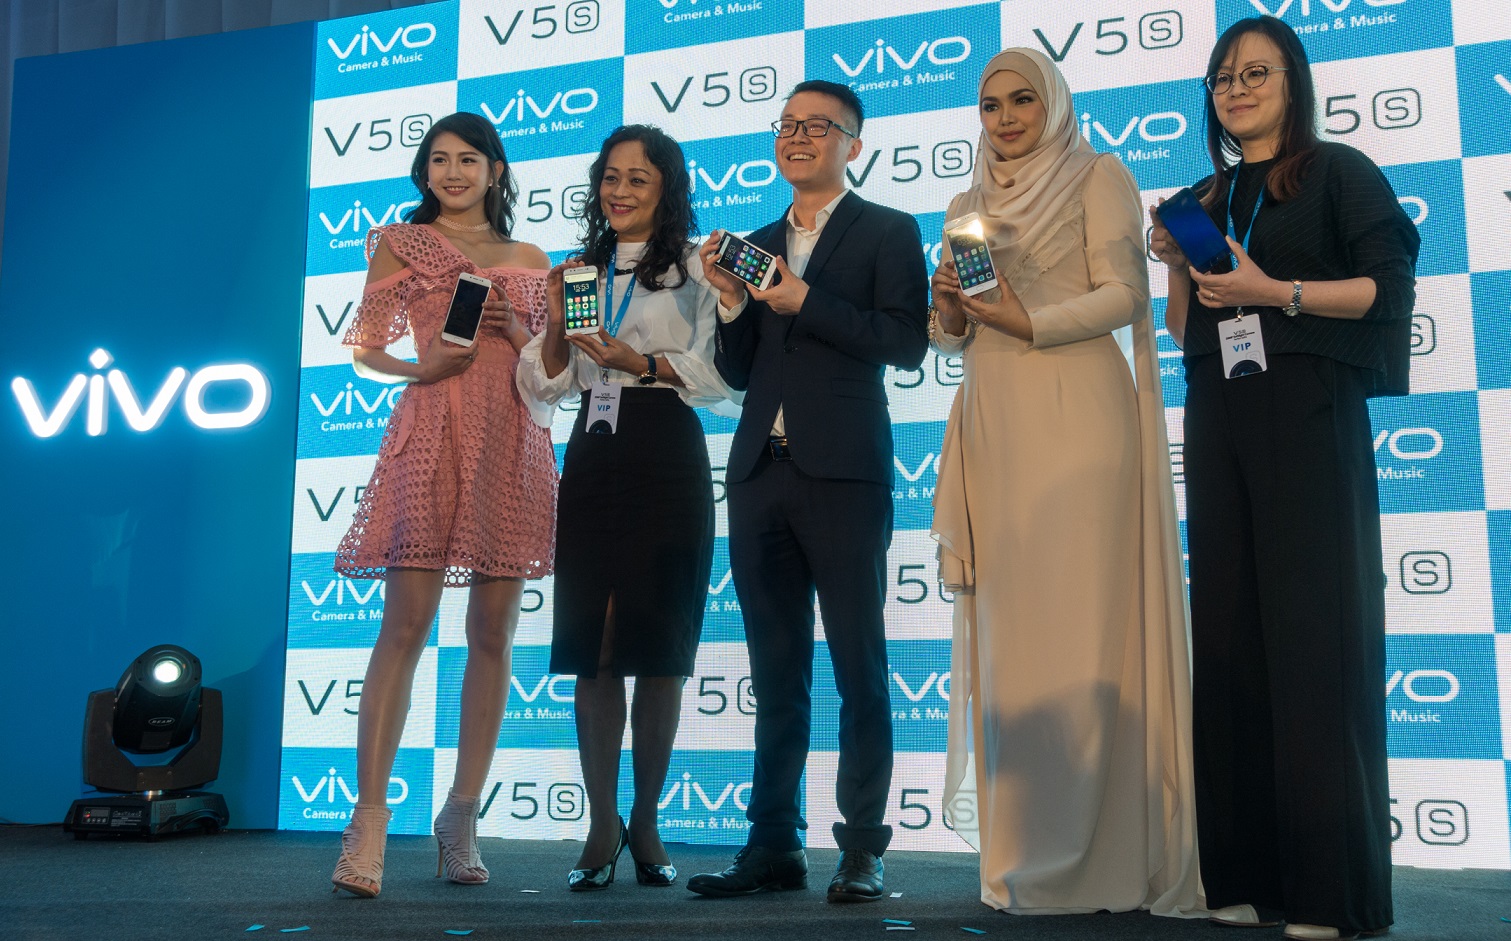 Vivo V5s to woo selfie- and music-loving crowd